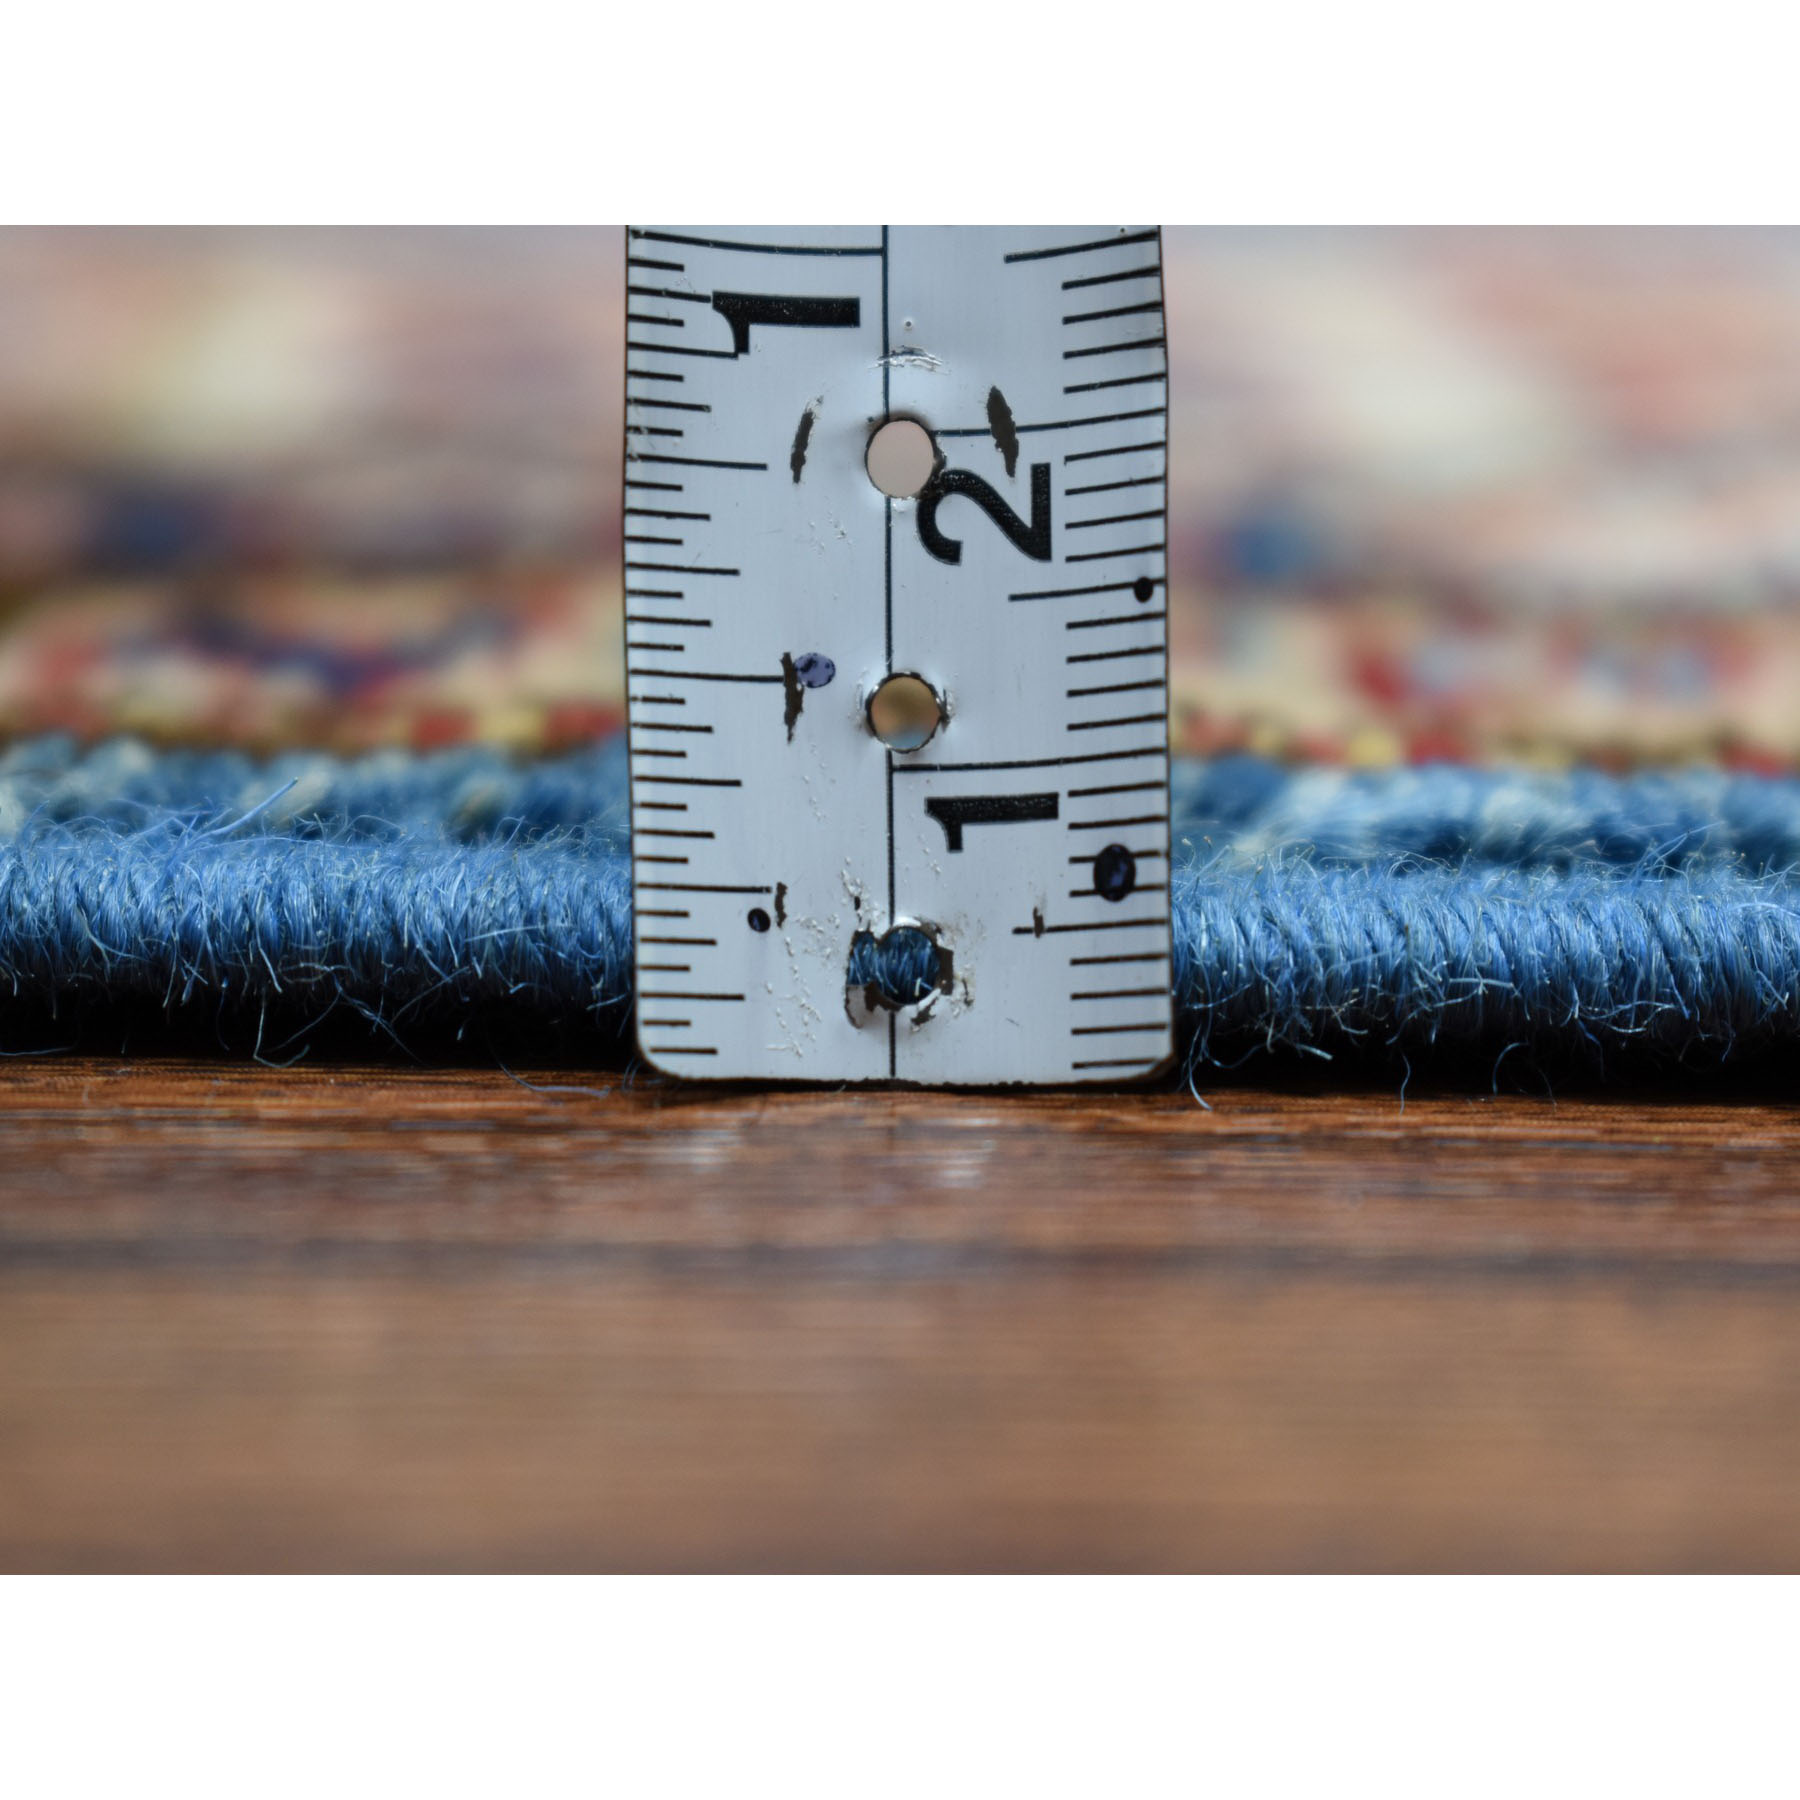 3-4 x5- Blue Super Kazak Geometric Design Pure Wool Hand-Knotted Oriental Rug 